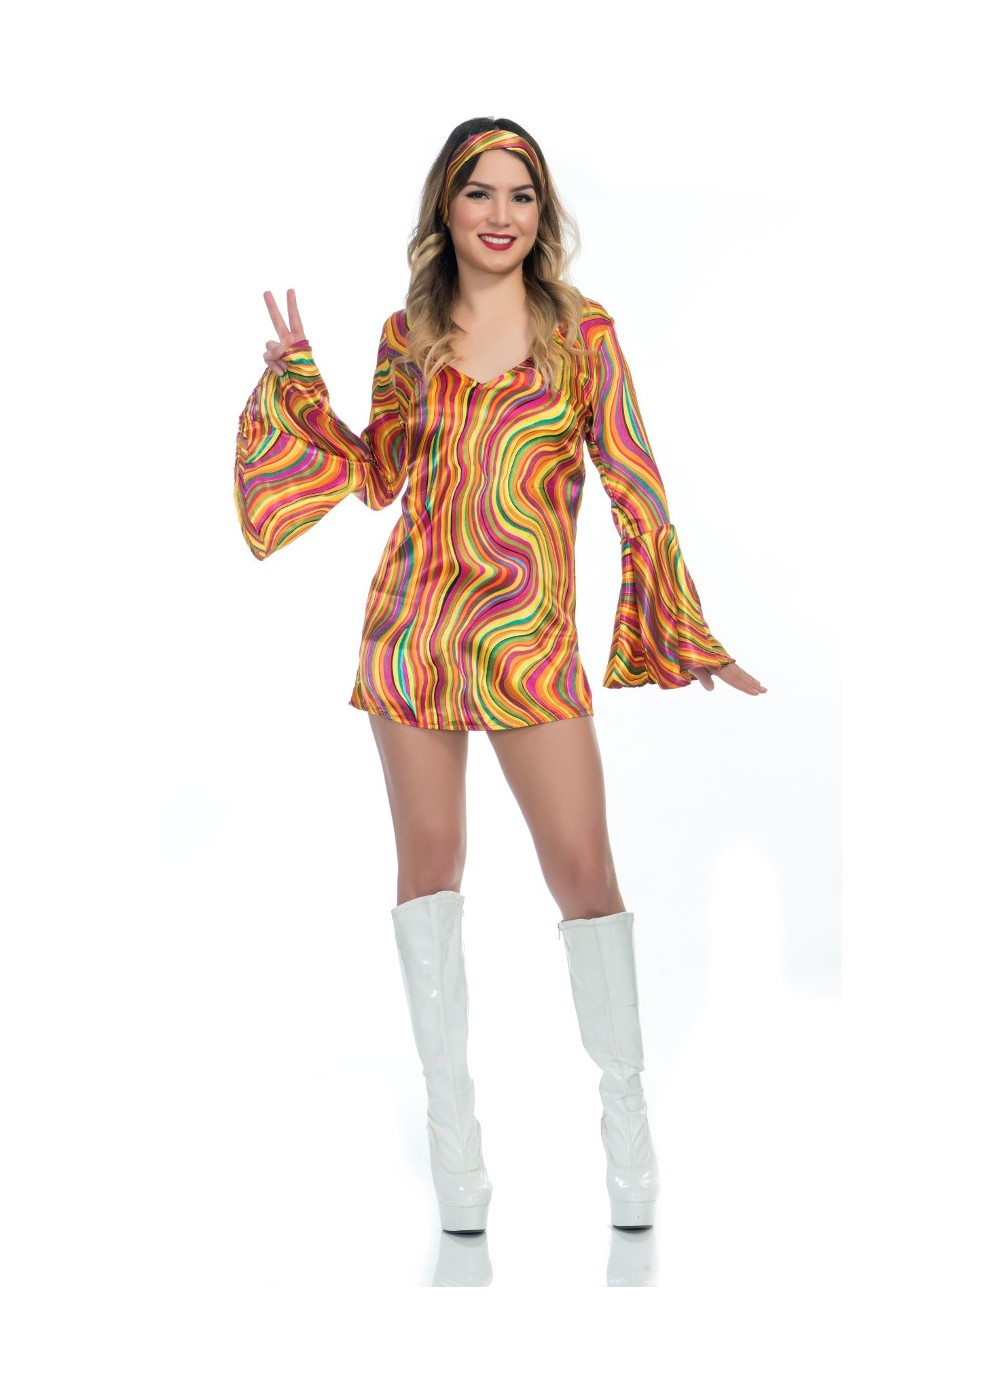 Rainbow Lights Disco Diva Women Costume - 1970s Costumes